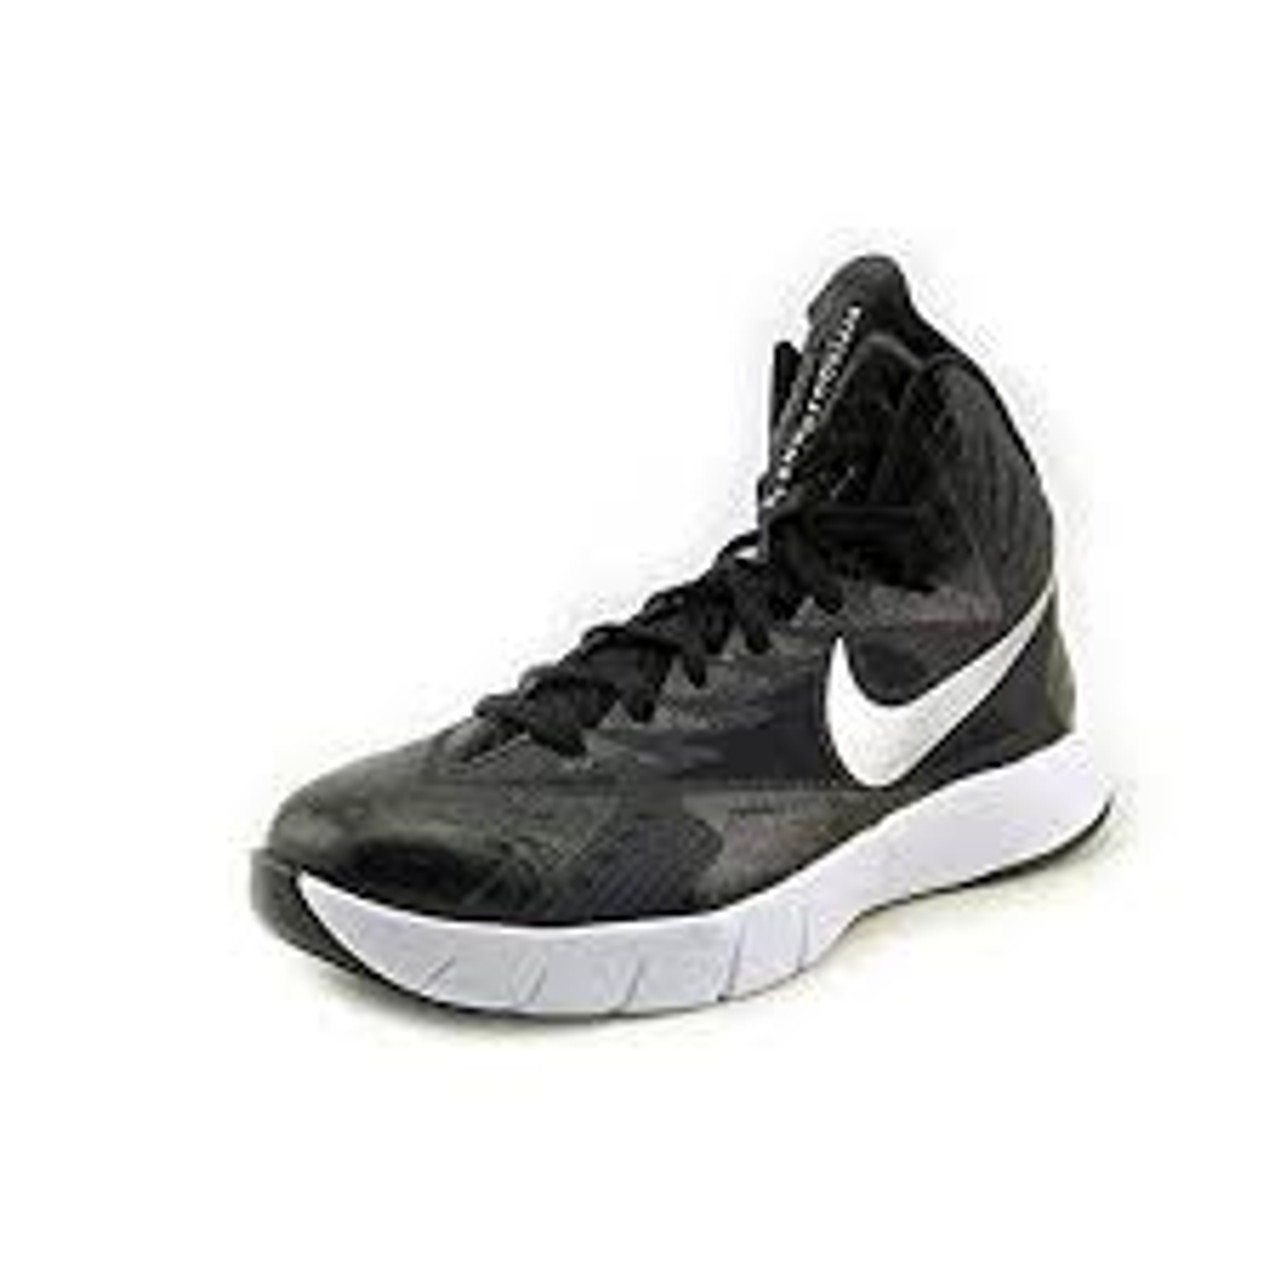 Nike Lunar Hyperquickness TB Basketball Shoes Black/Metallic Silver